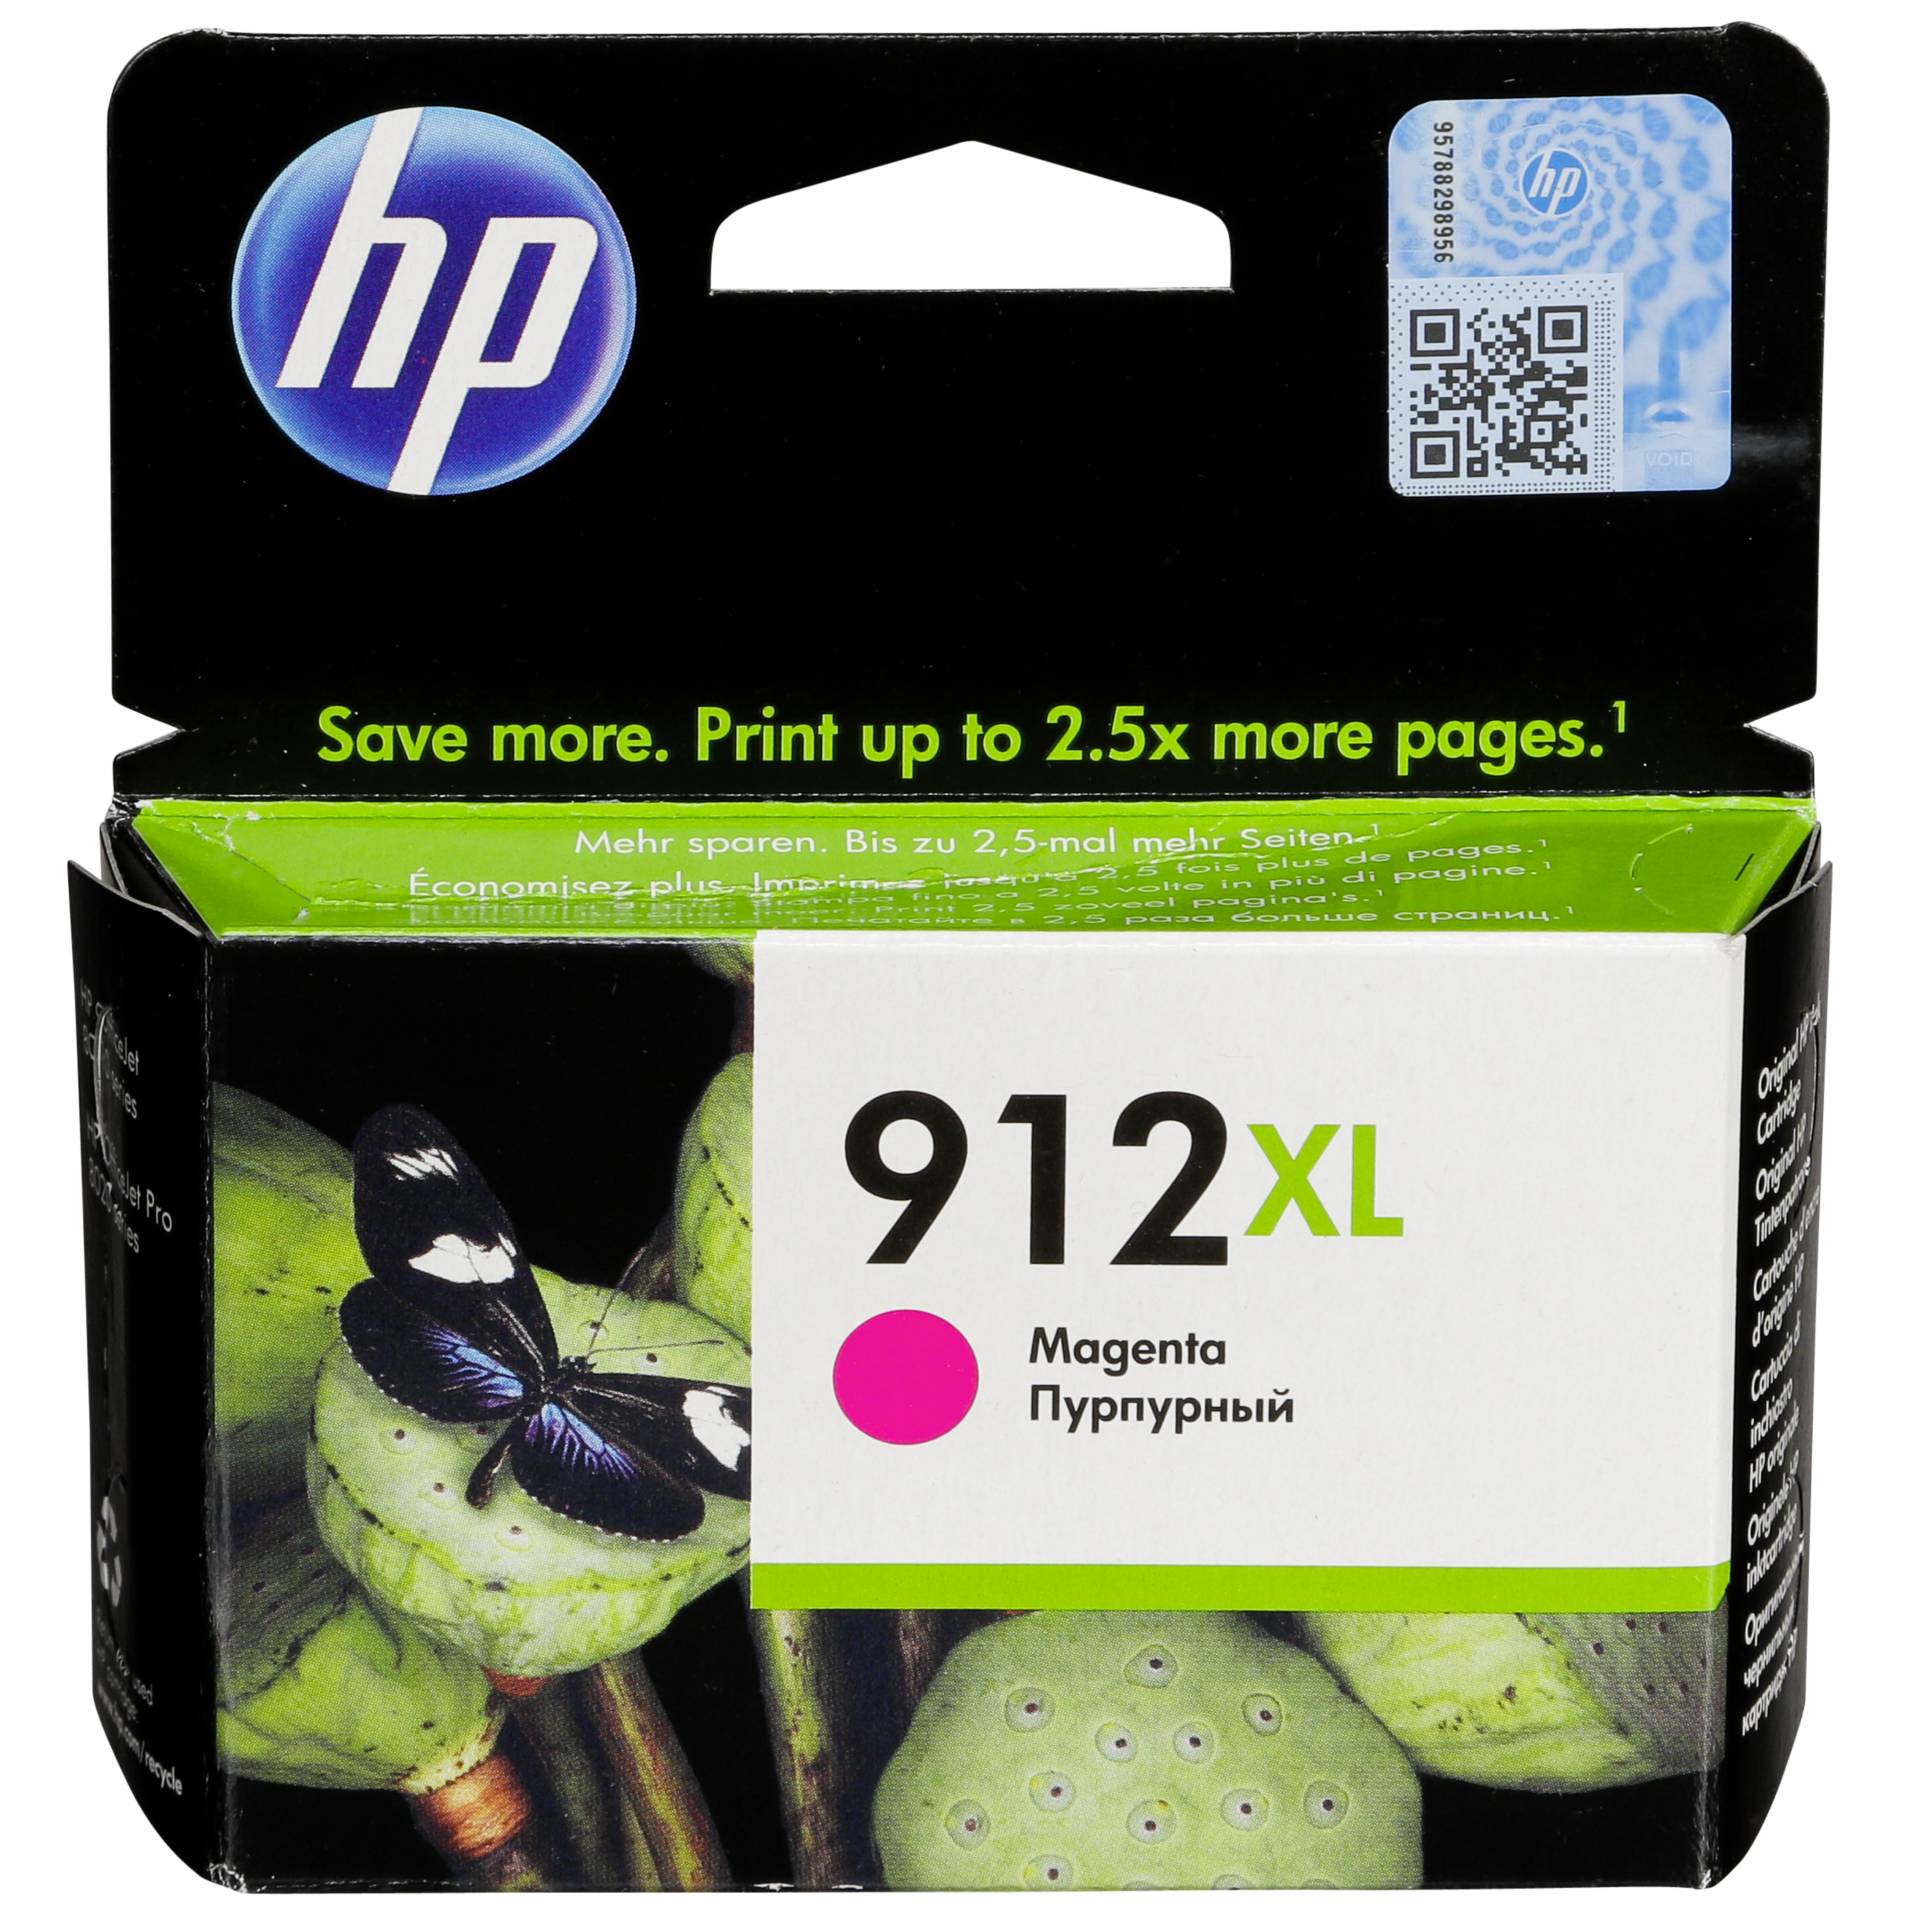 HP Tinte 912 XL magenta Original 